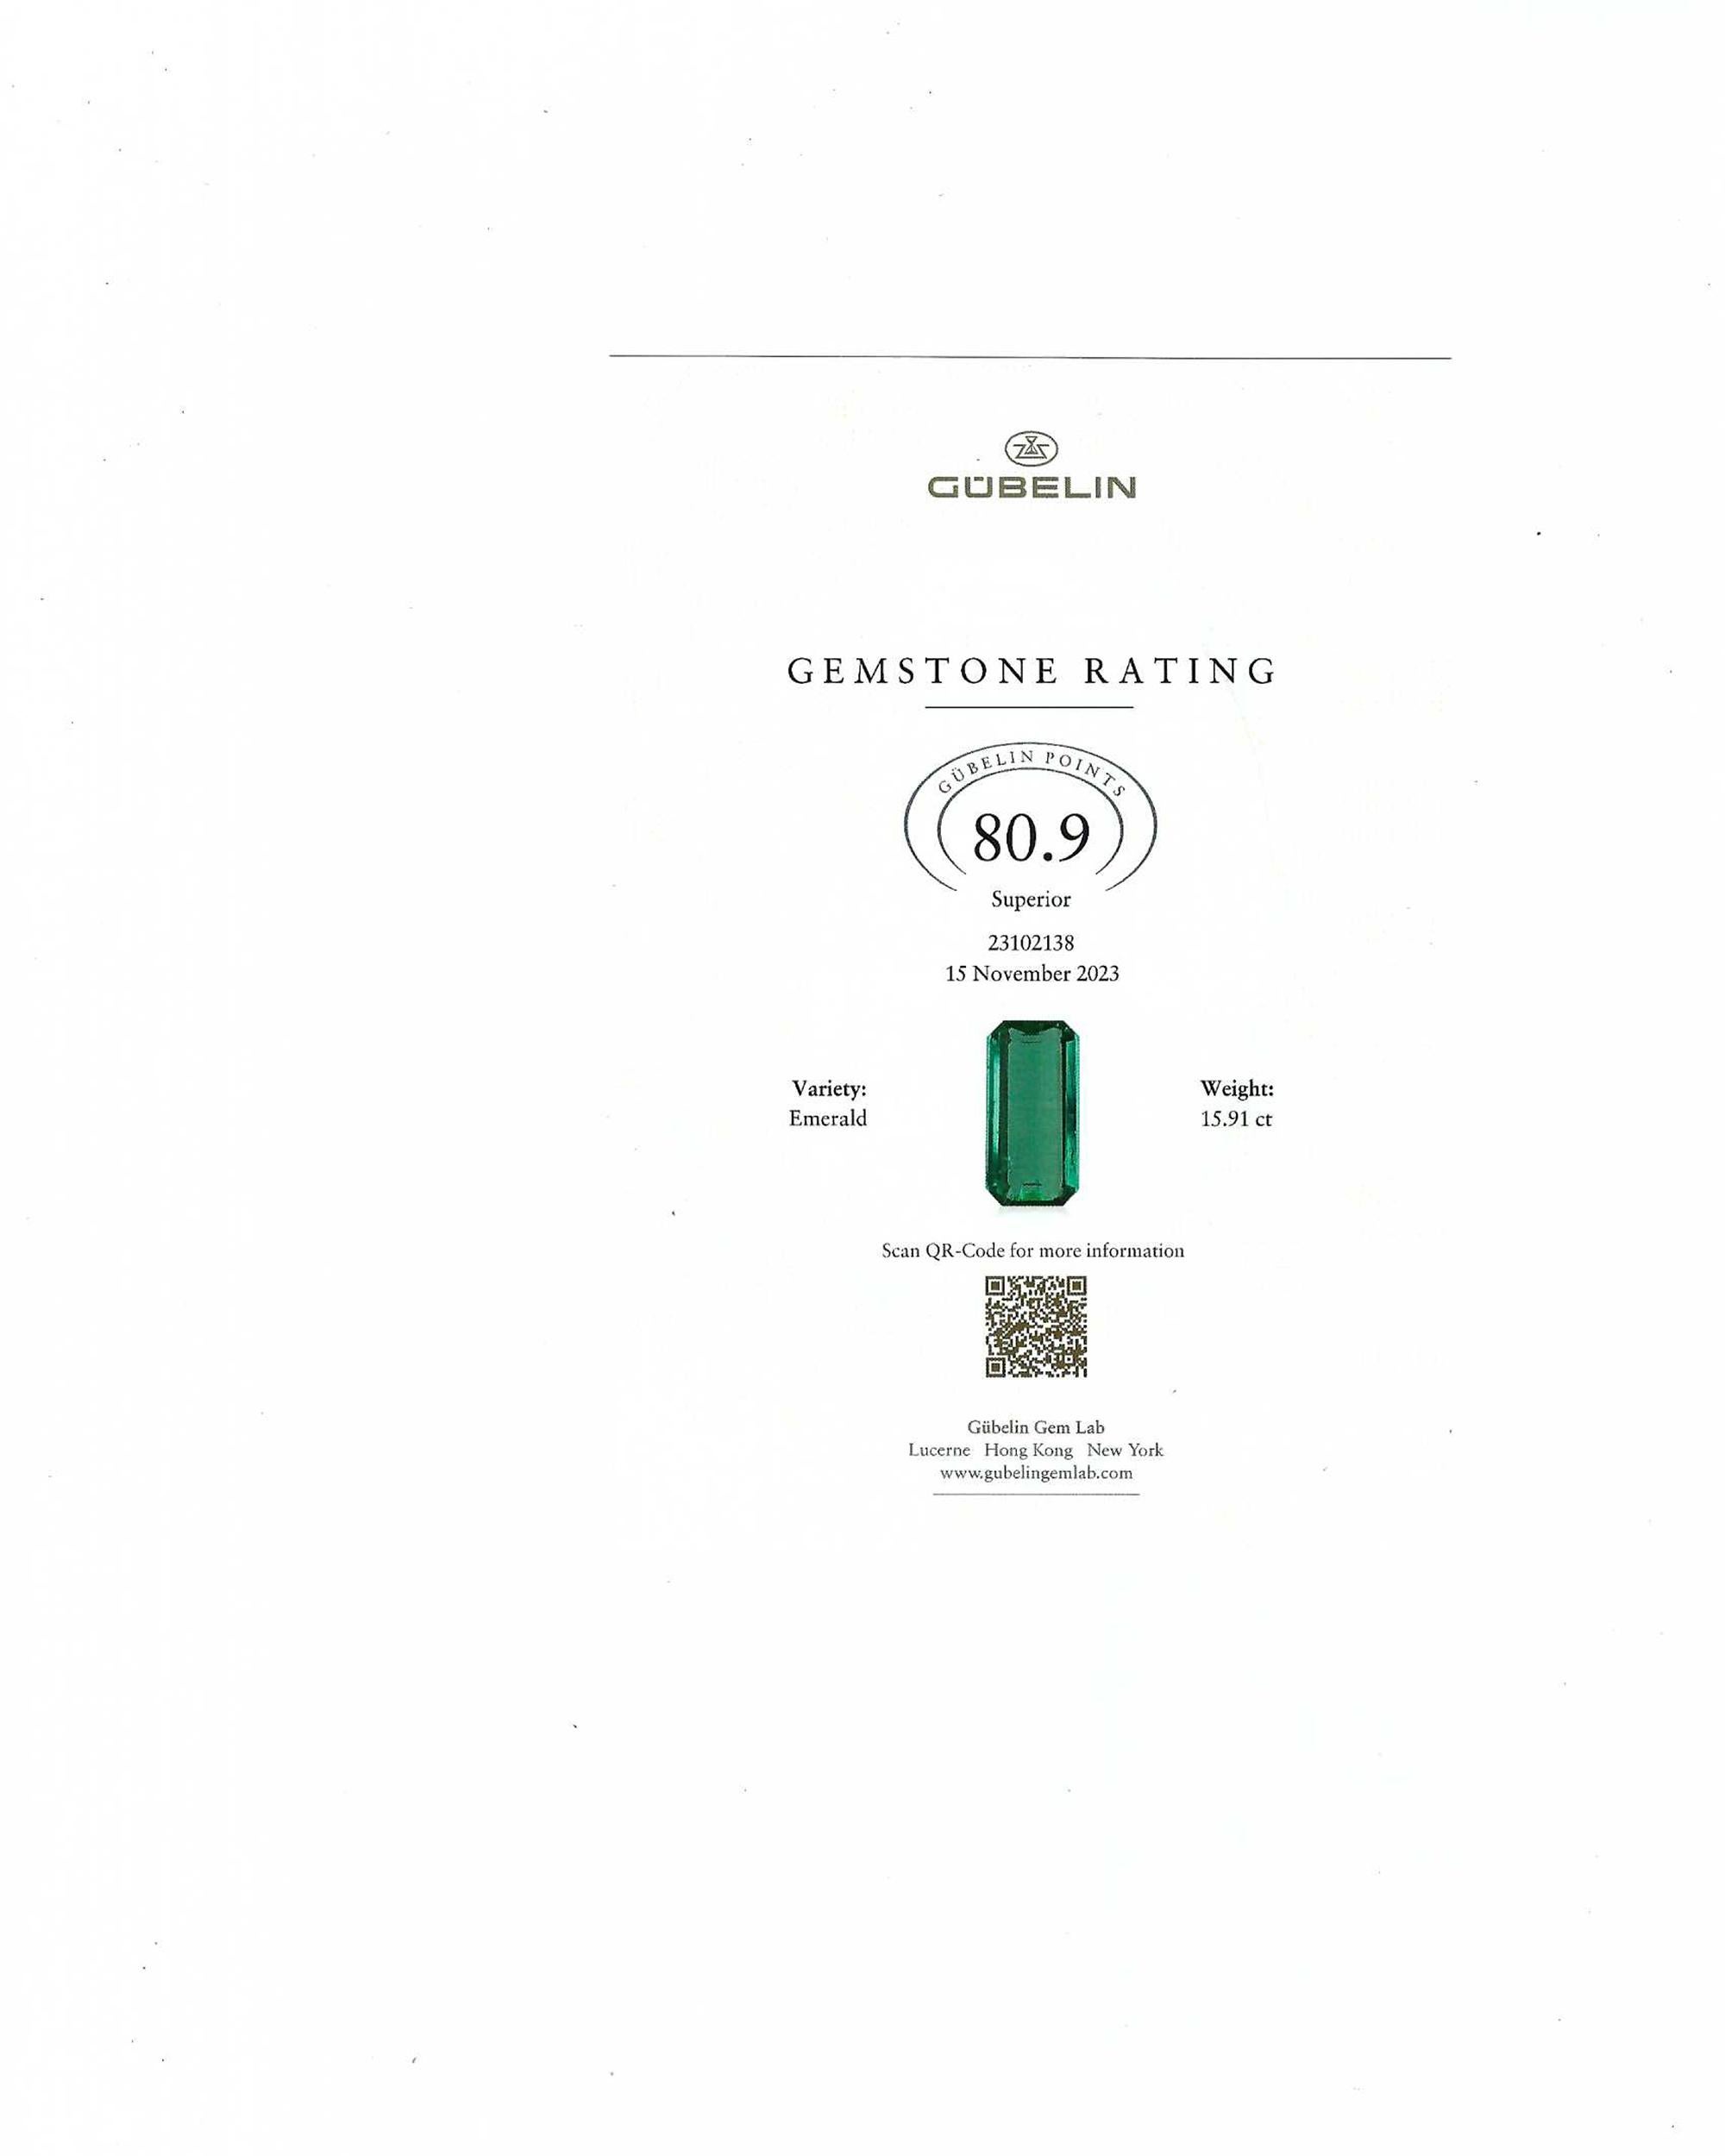 Women's Spectra Fine Jewelry, Certified 15.91 Carat Colombian Emerald Ring For Sale